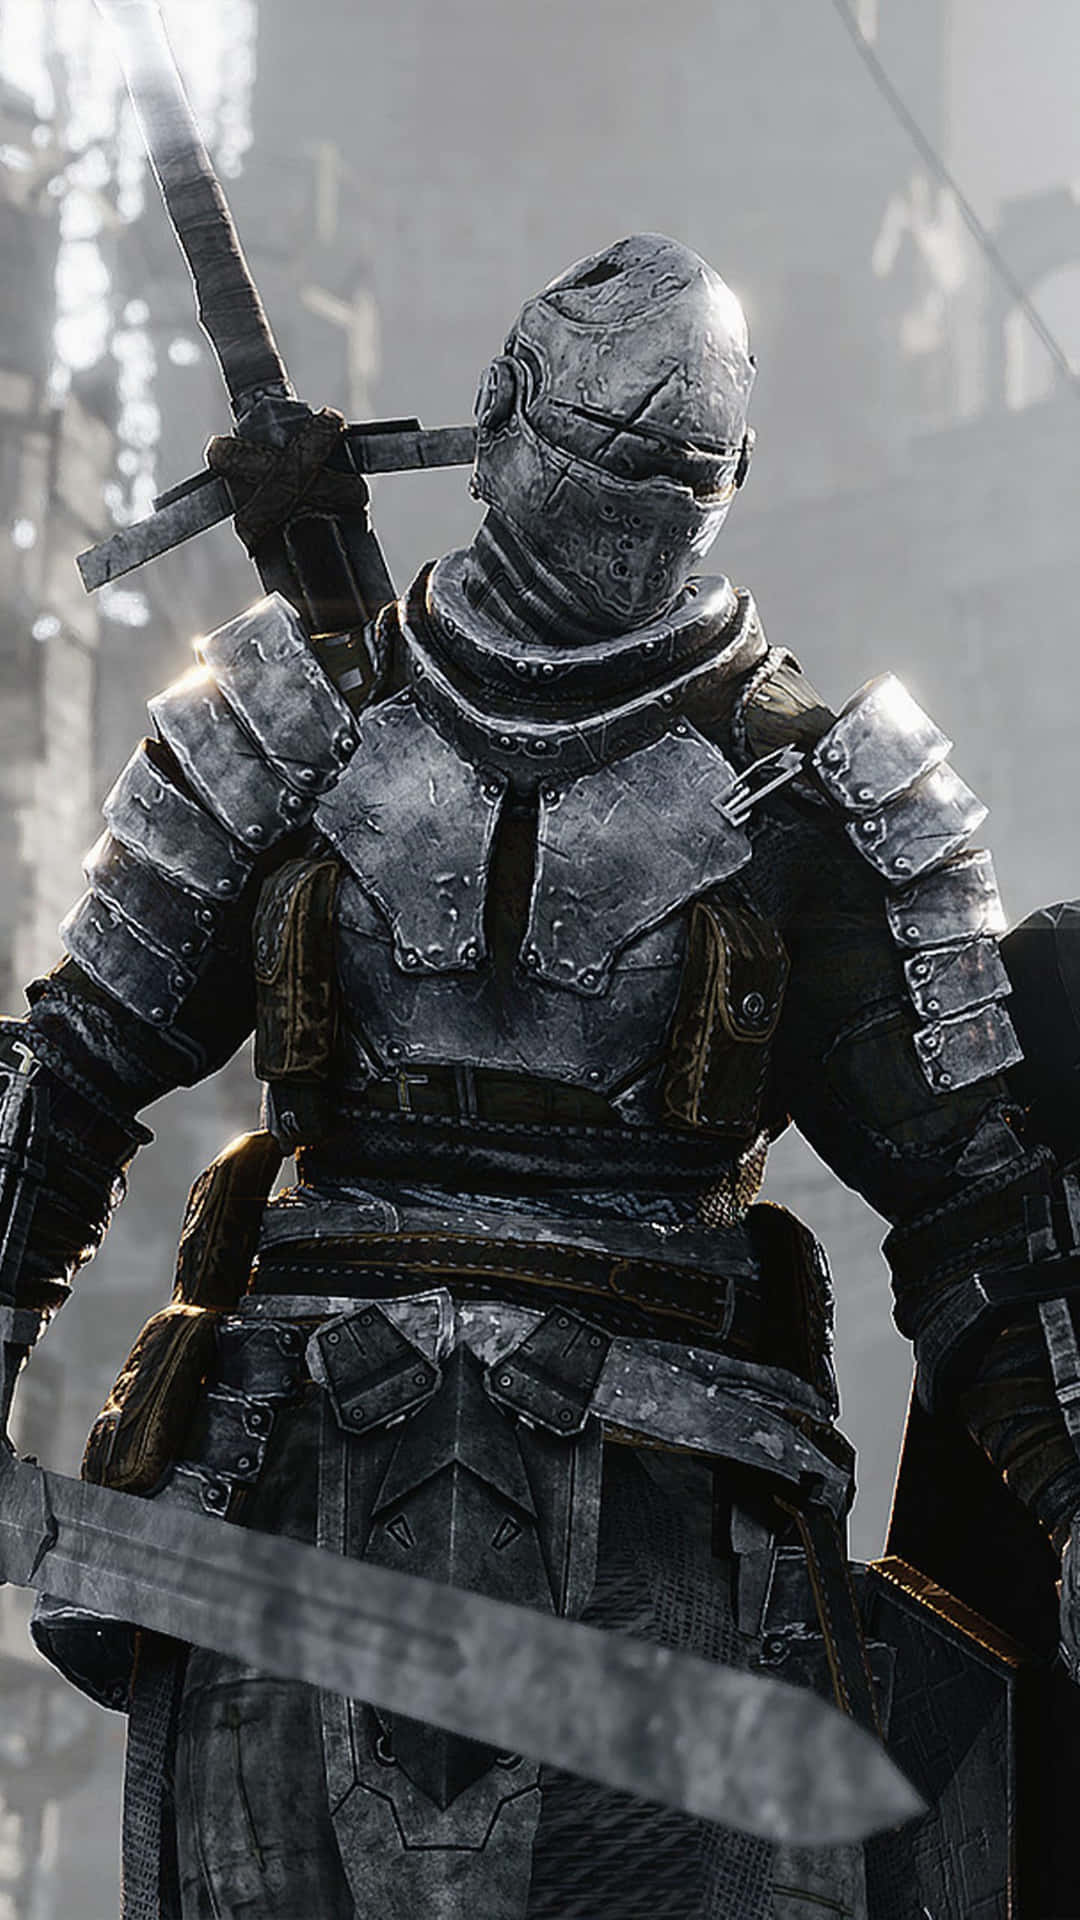 The Vigilant Warden Armor from For Honor Wallpaper